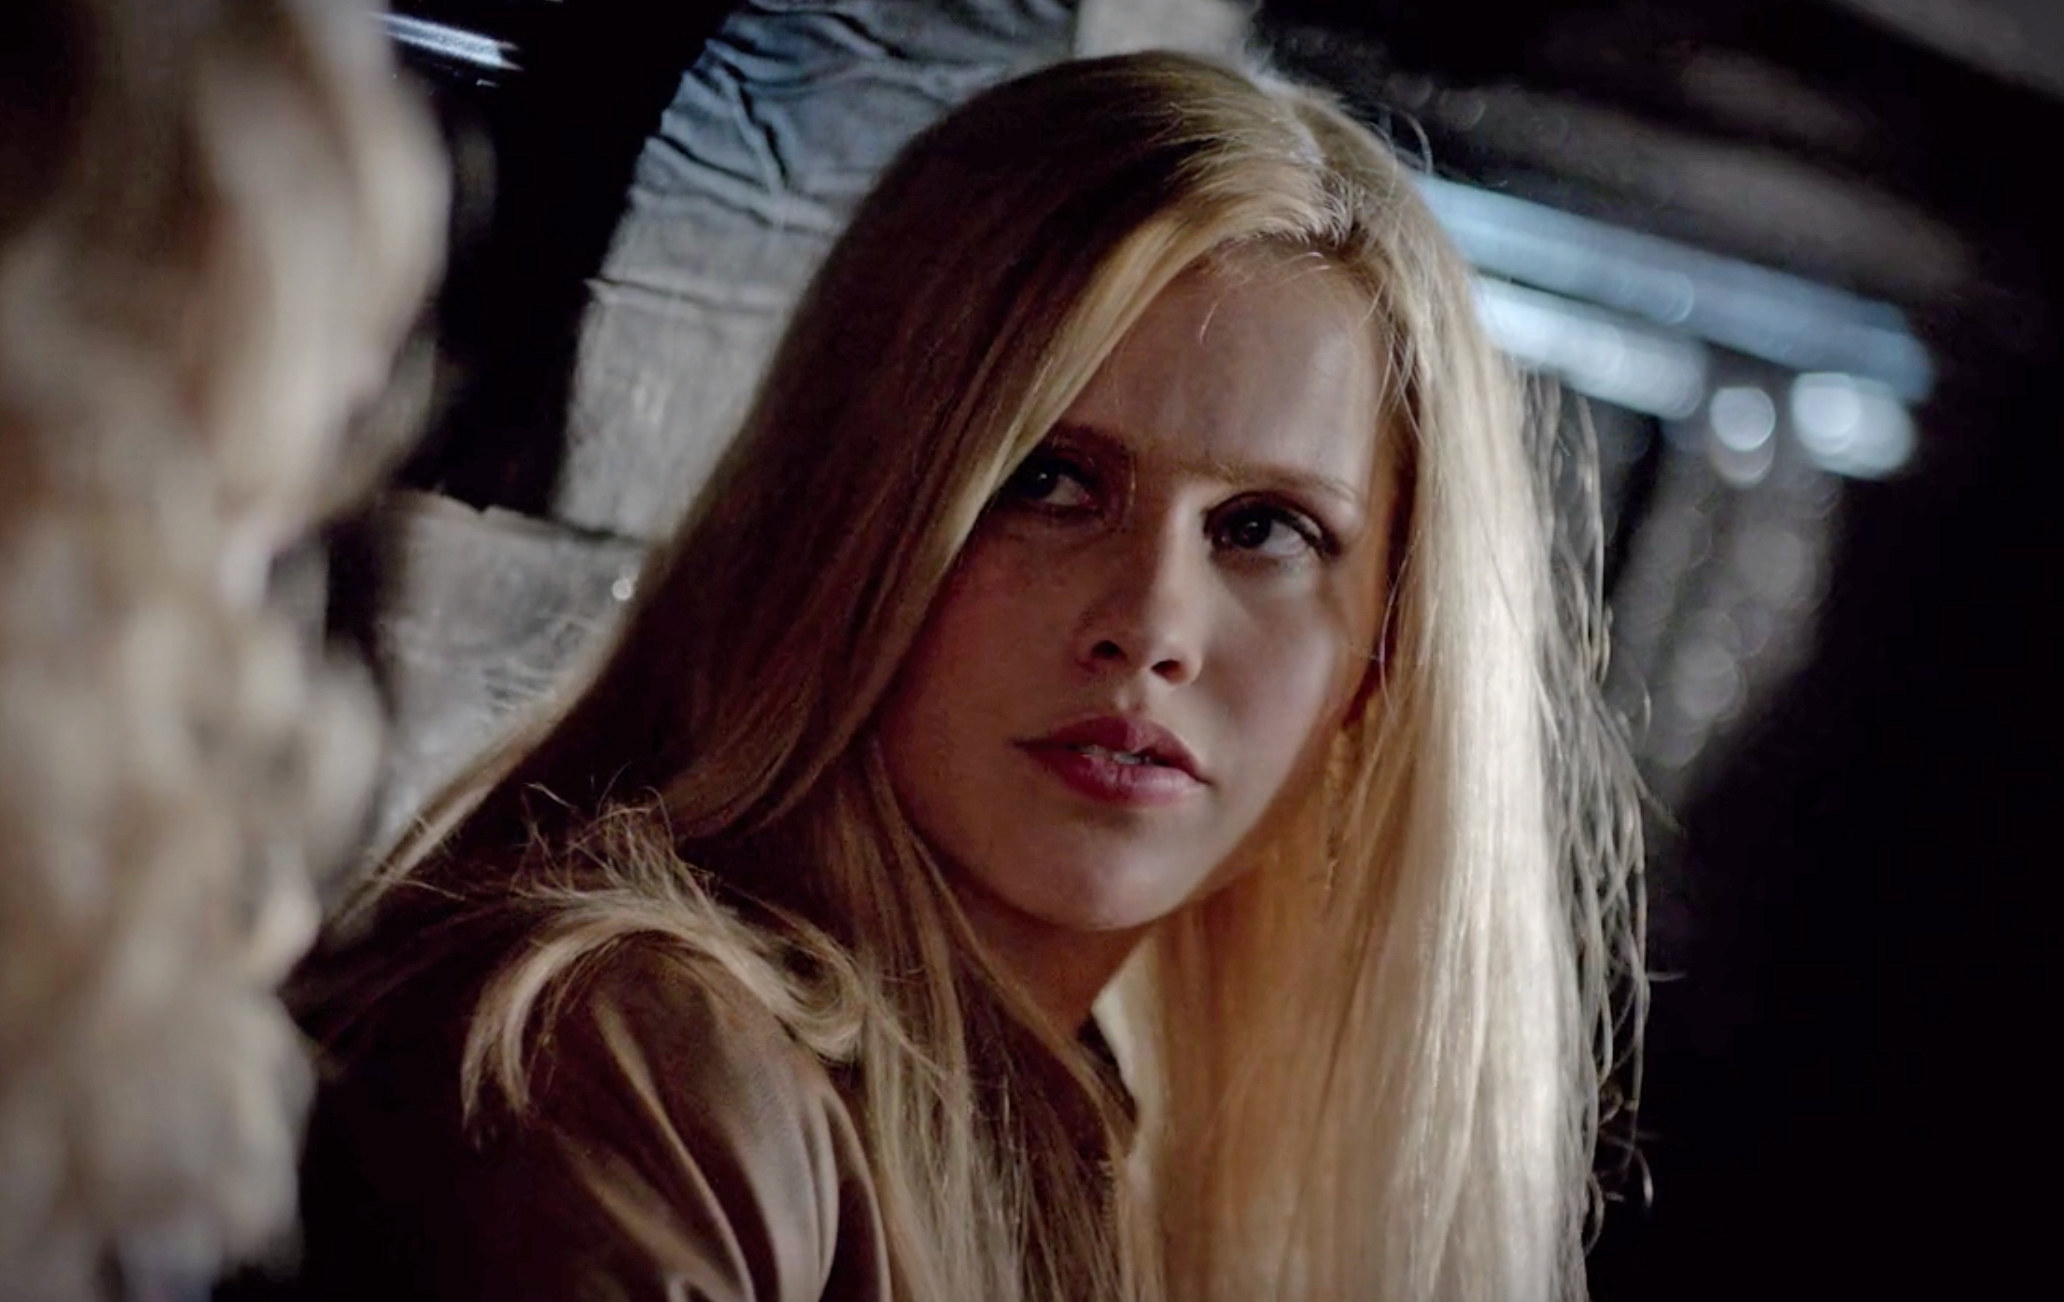 Rebekah looking off to the side